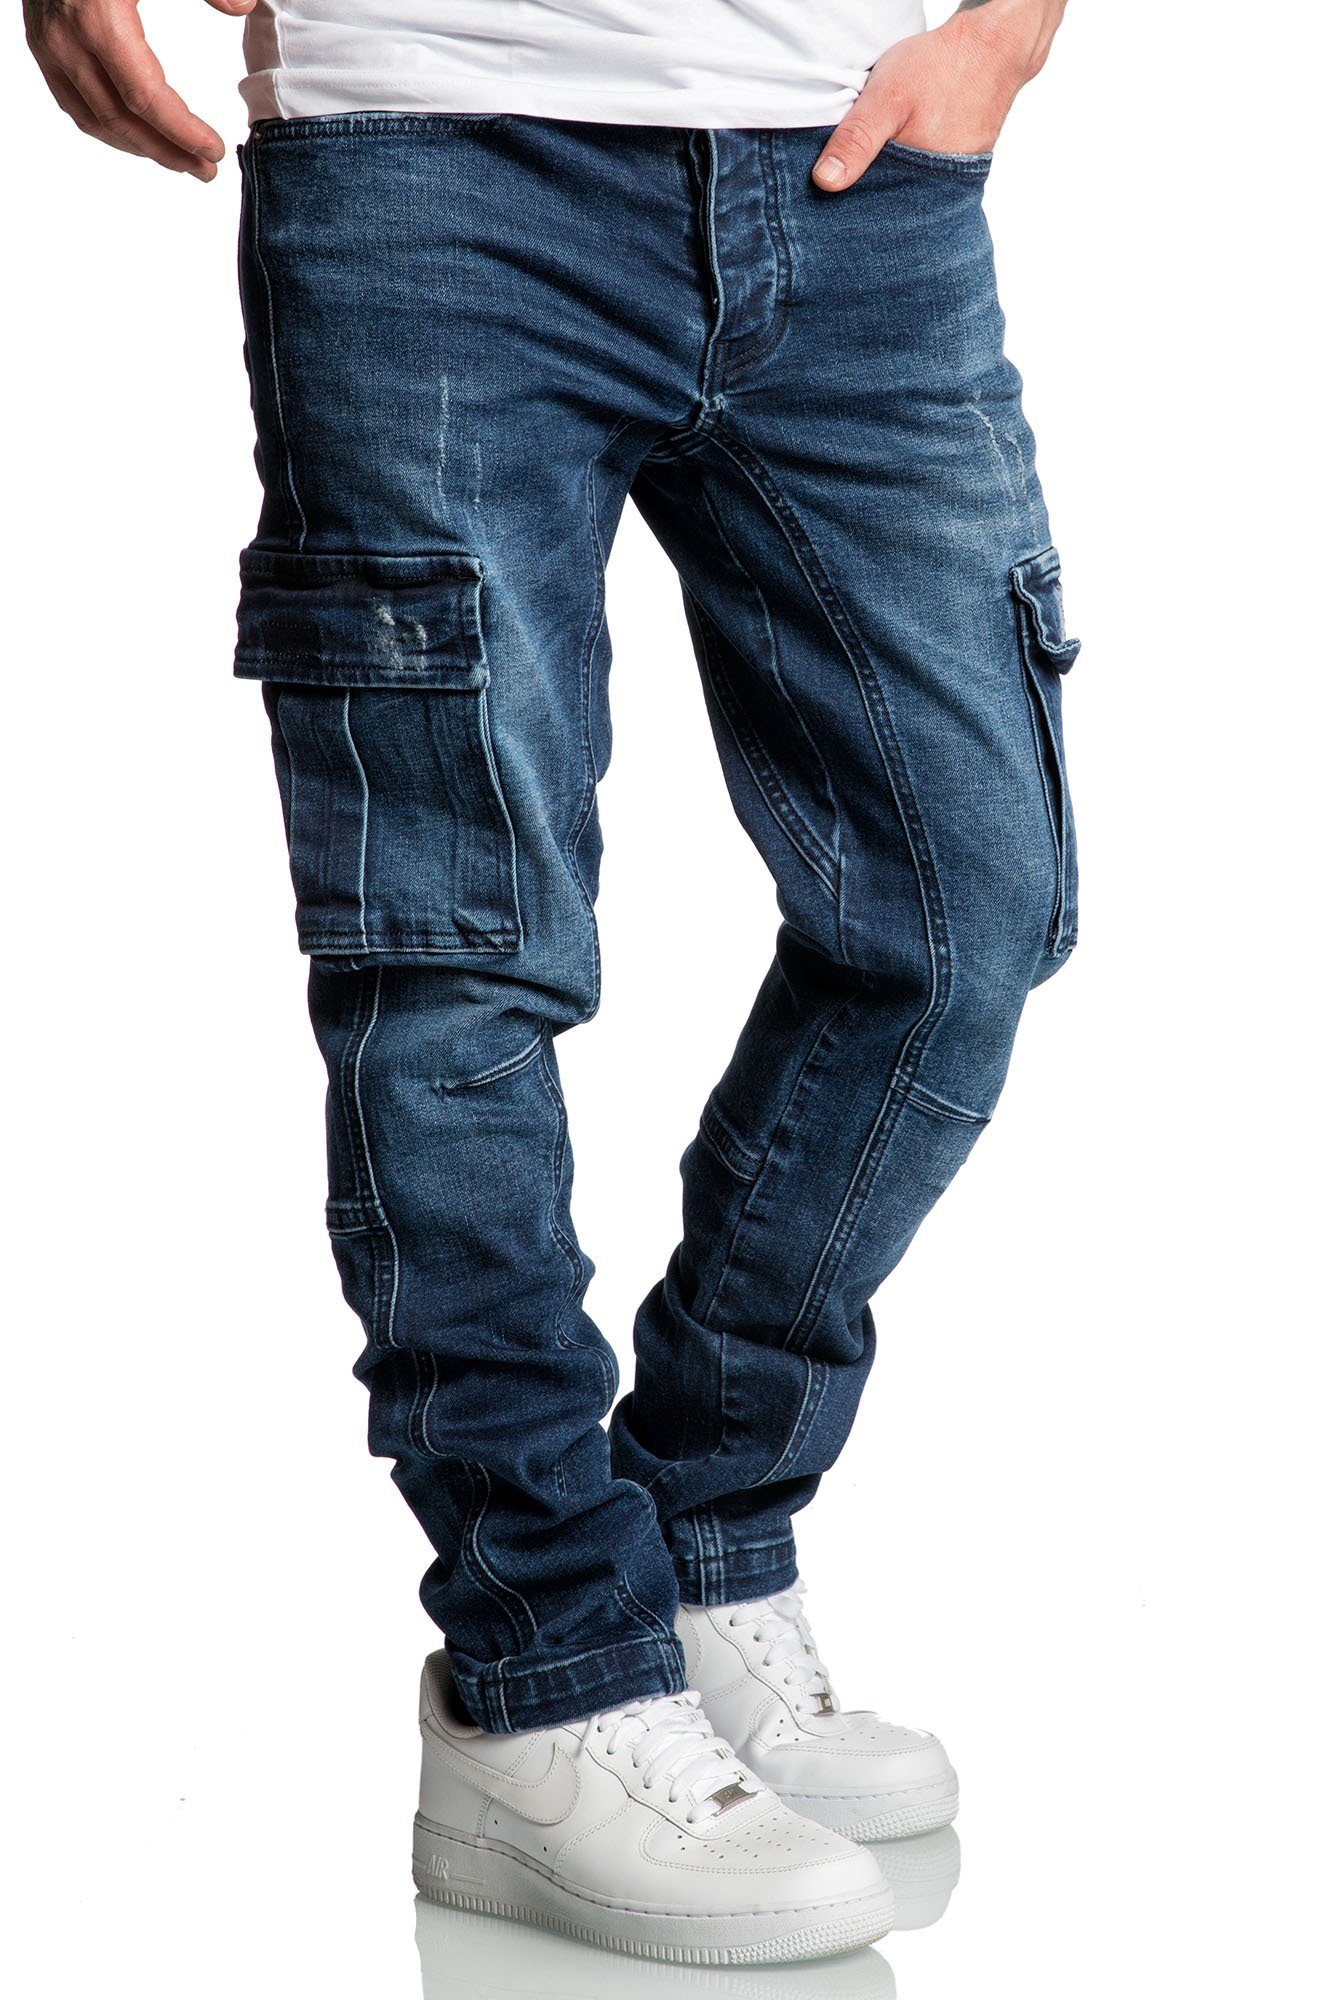 Amaci&Sons Straight-Jeans CARY Herren Regular Fit Cargo Denim Jeans Hose